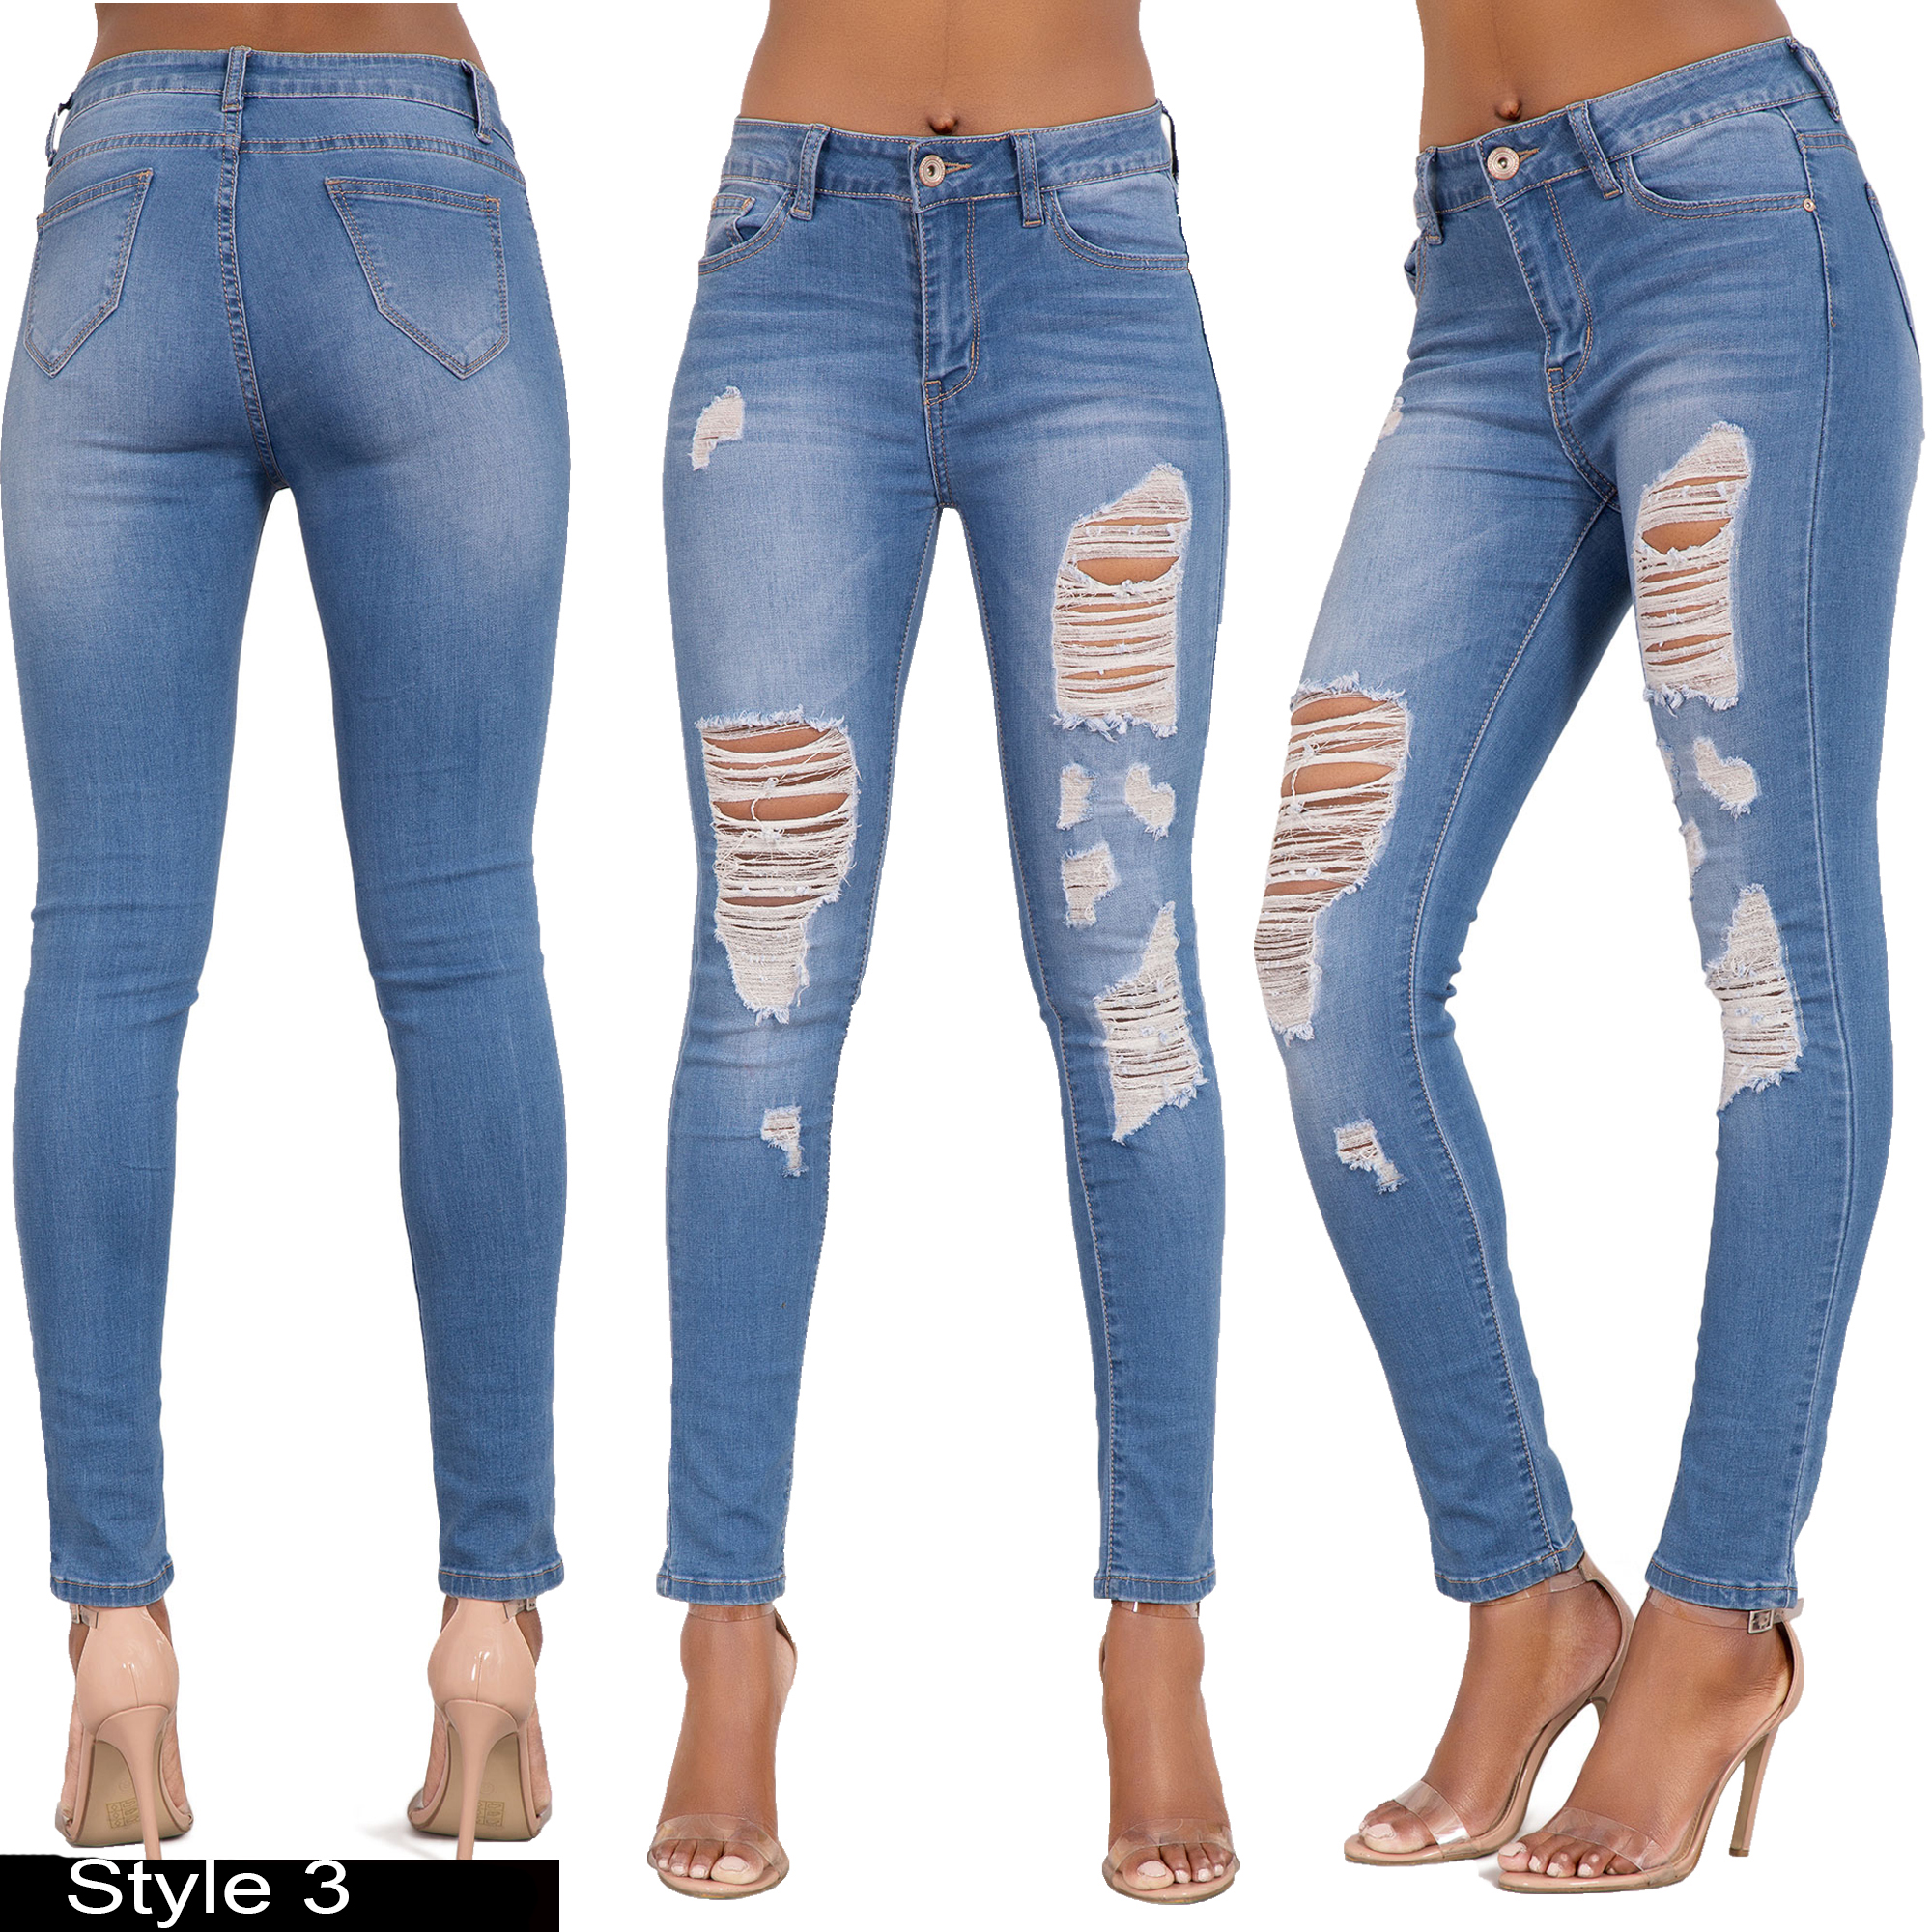 NEW Ladies Women Blue Black Ripped Skinny Jeans Slim Fit Stretch Denim ...